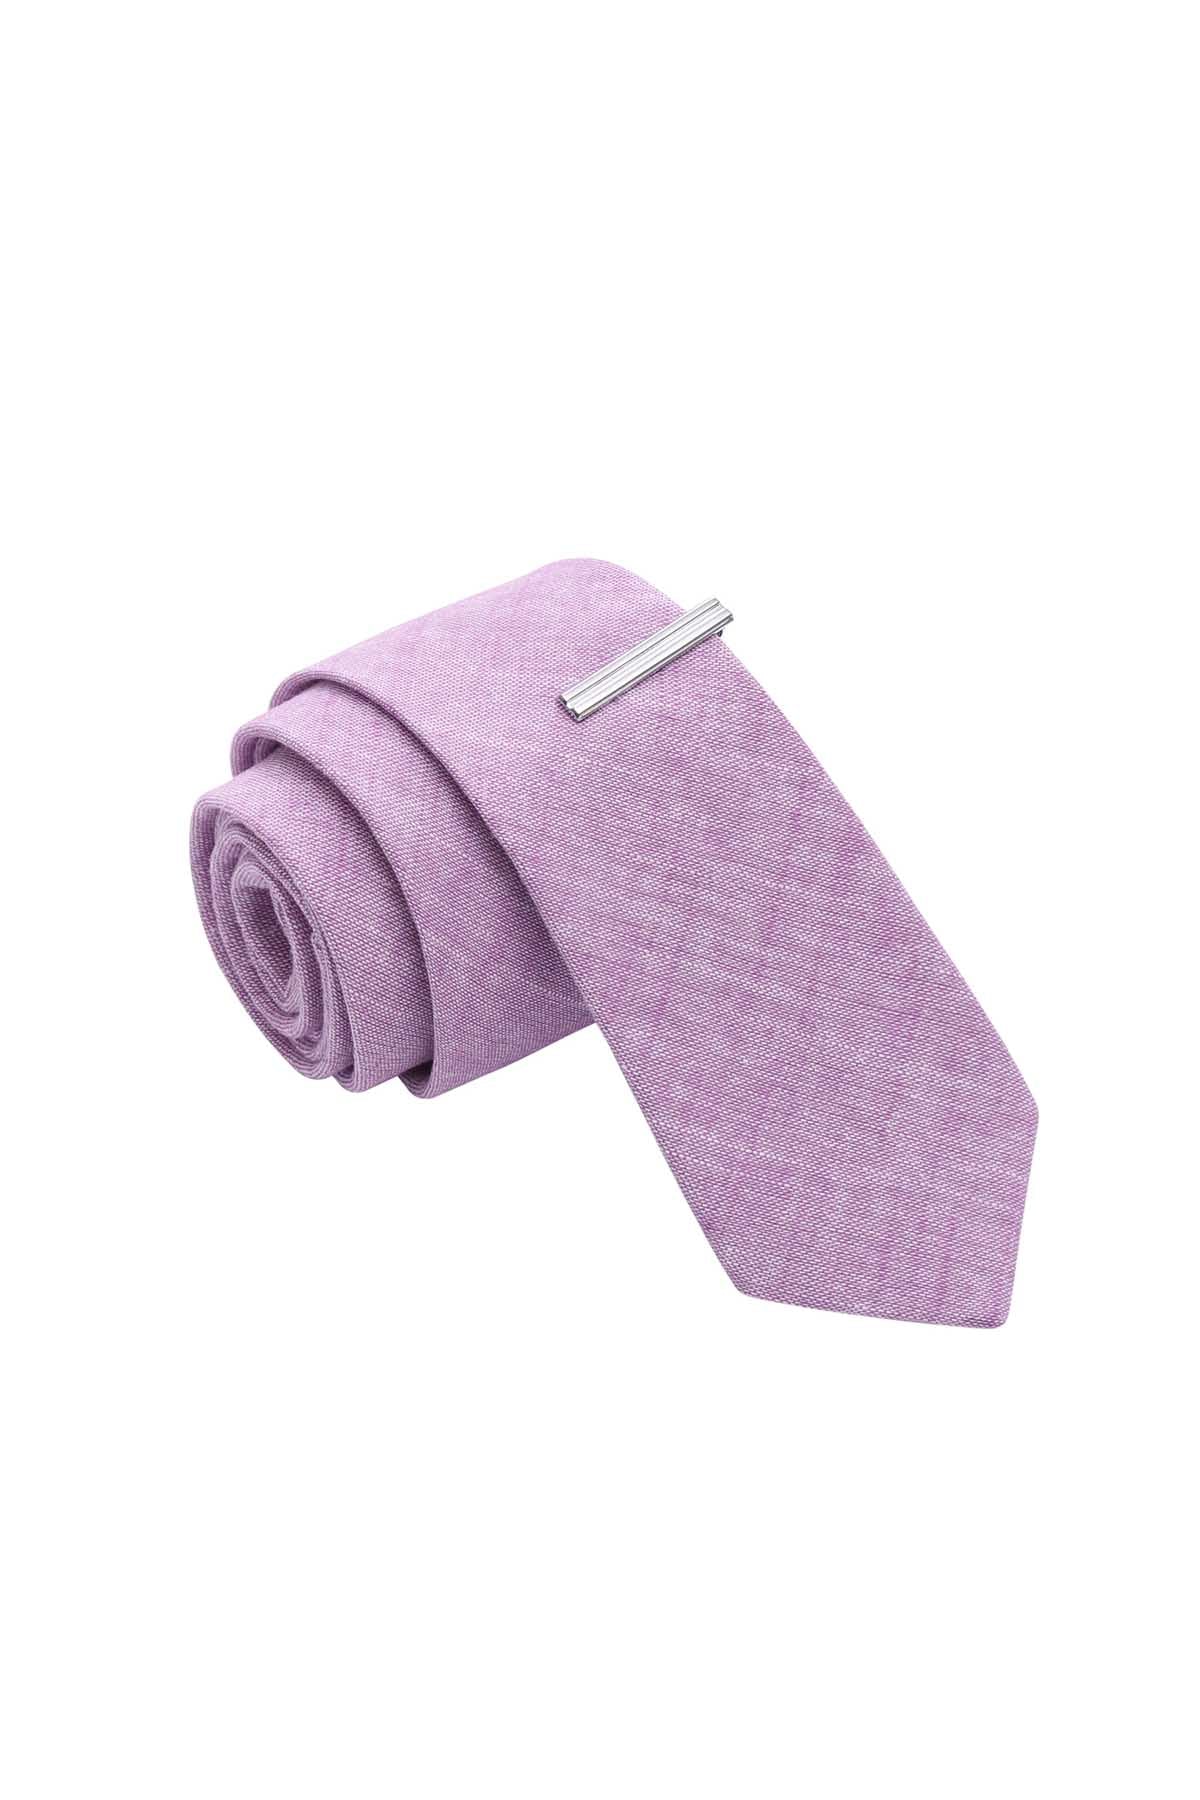 Skinny Tie Madness Purple Barney Stinks at Dodgeball Tie